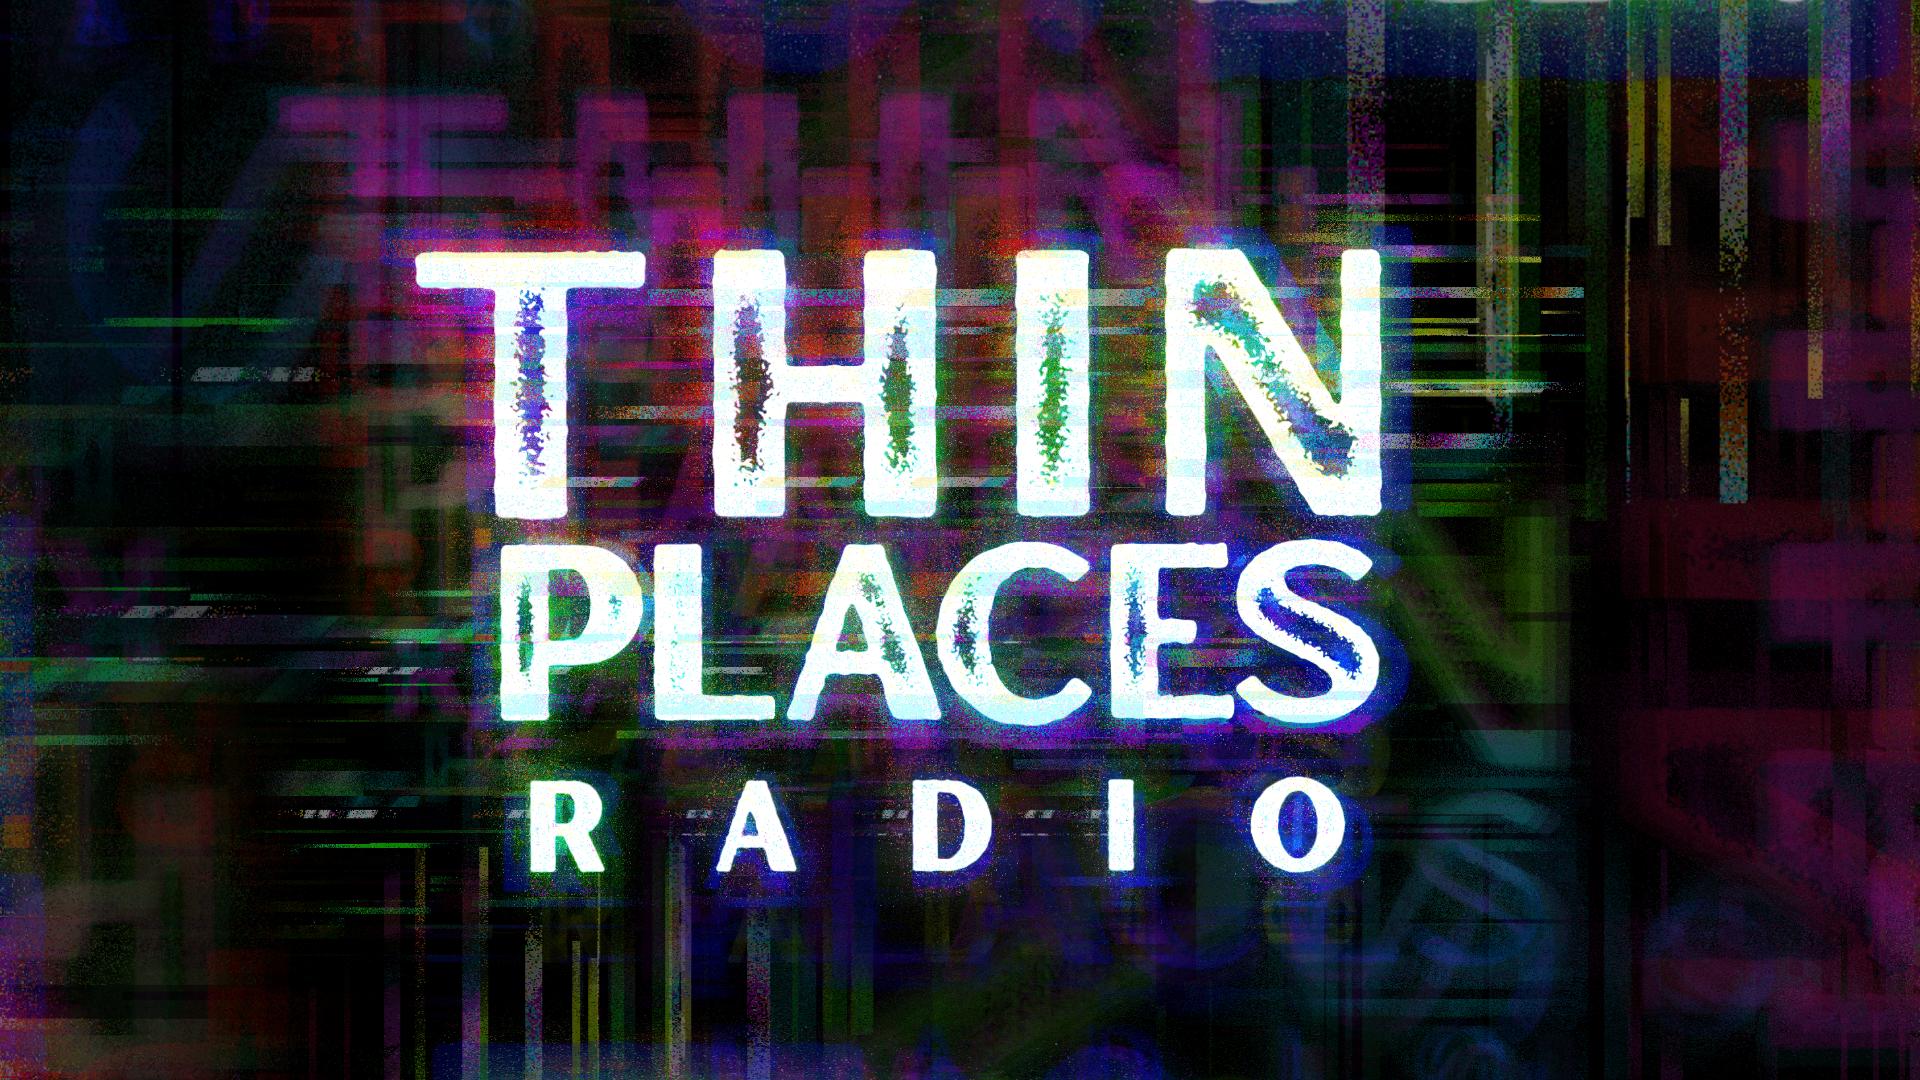 Thin Places Radio